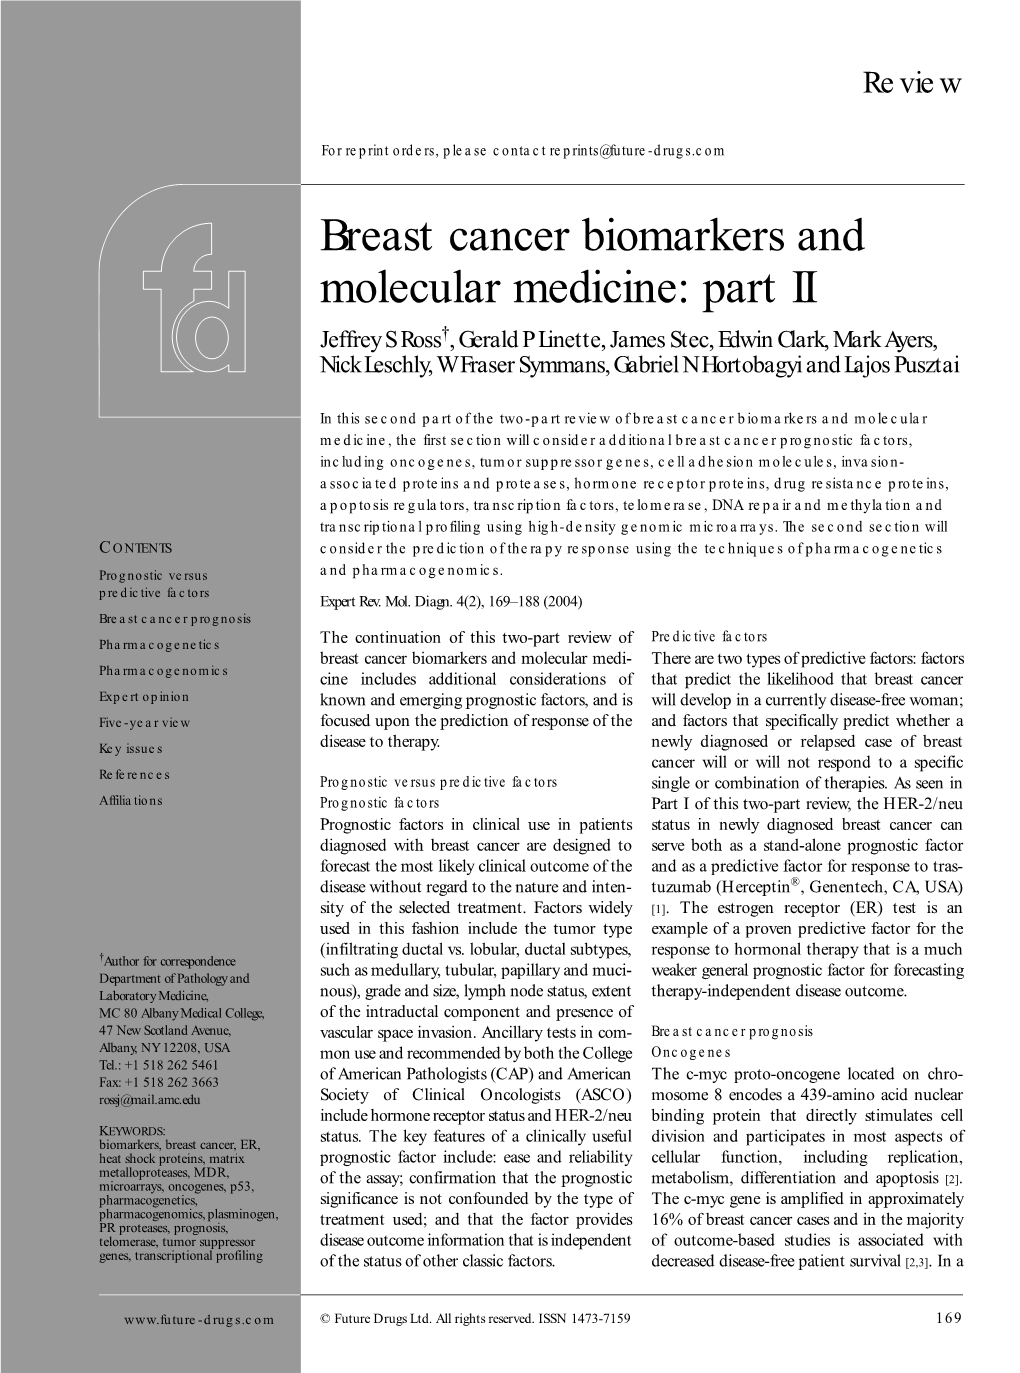 Breast Cancer Biomarkers and Molecular Medicine: Part II